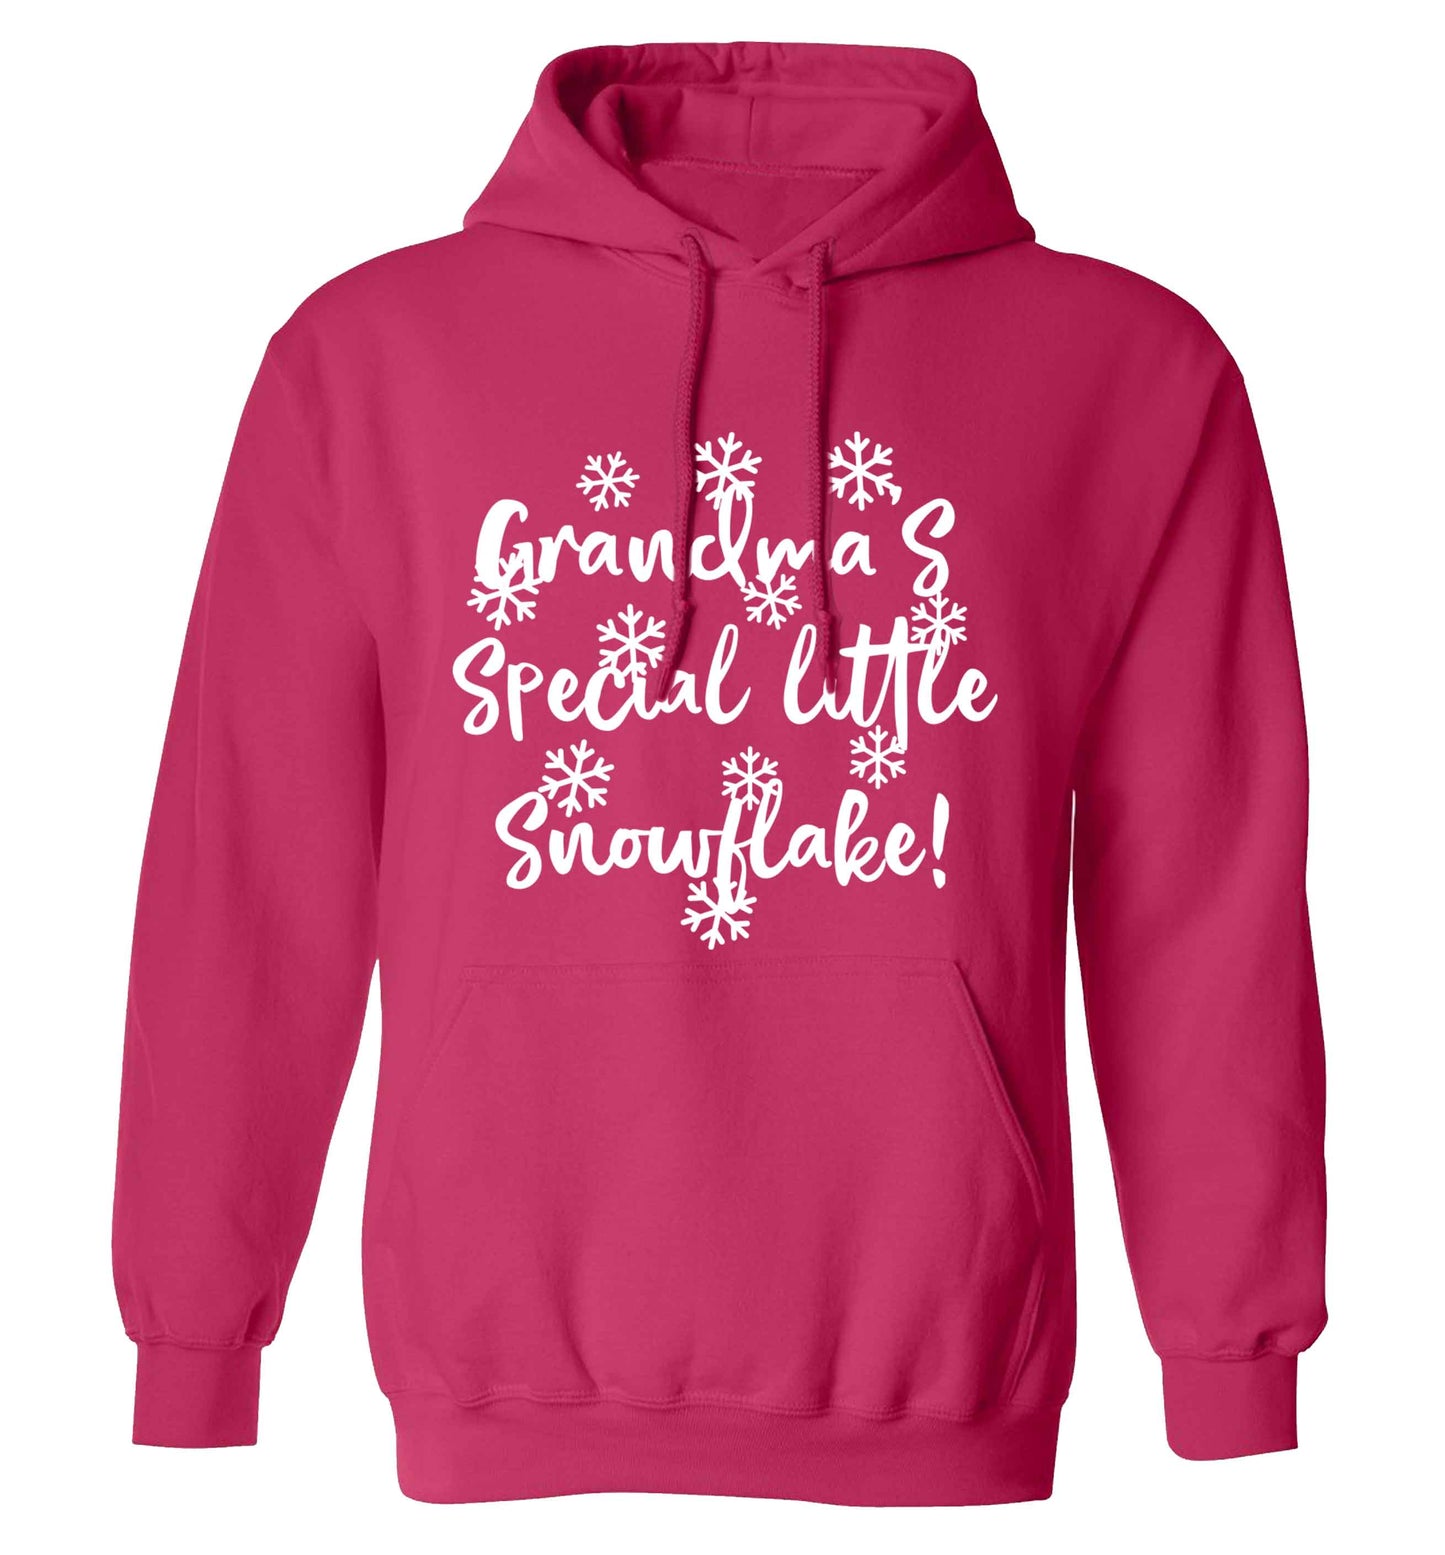 Grandma's special little snowflake adults unisex pink hoodie 2XL